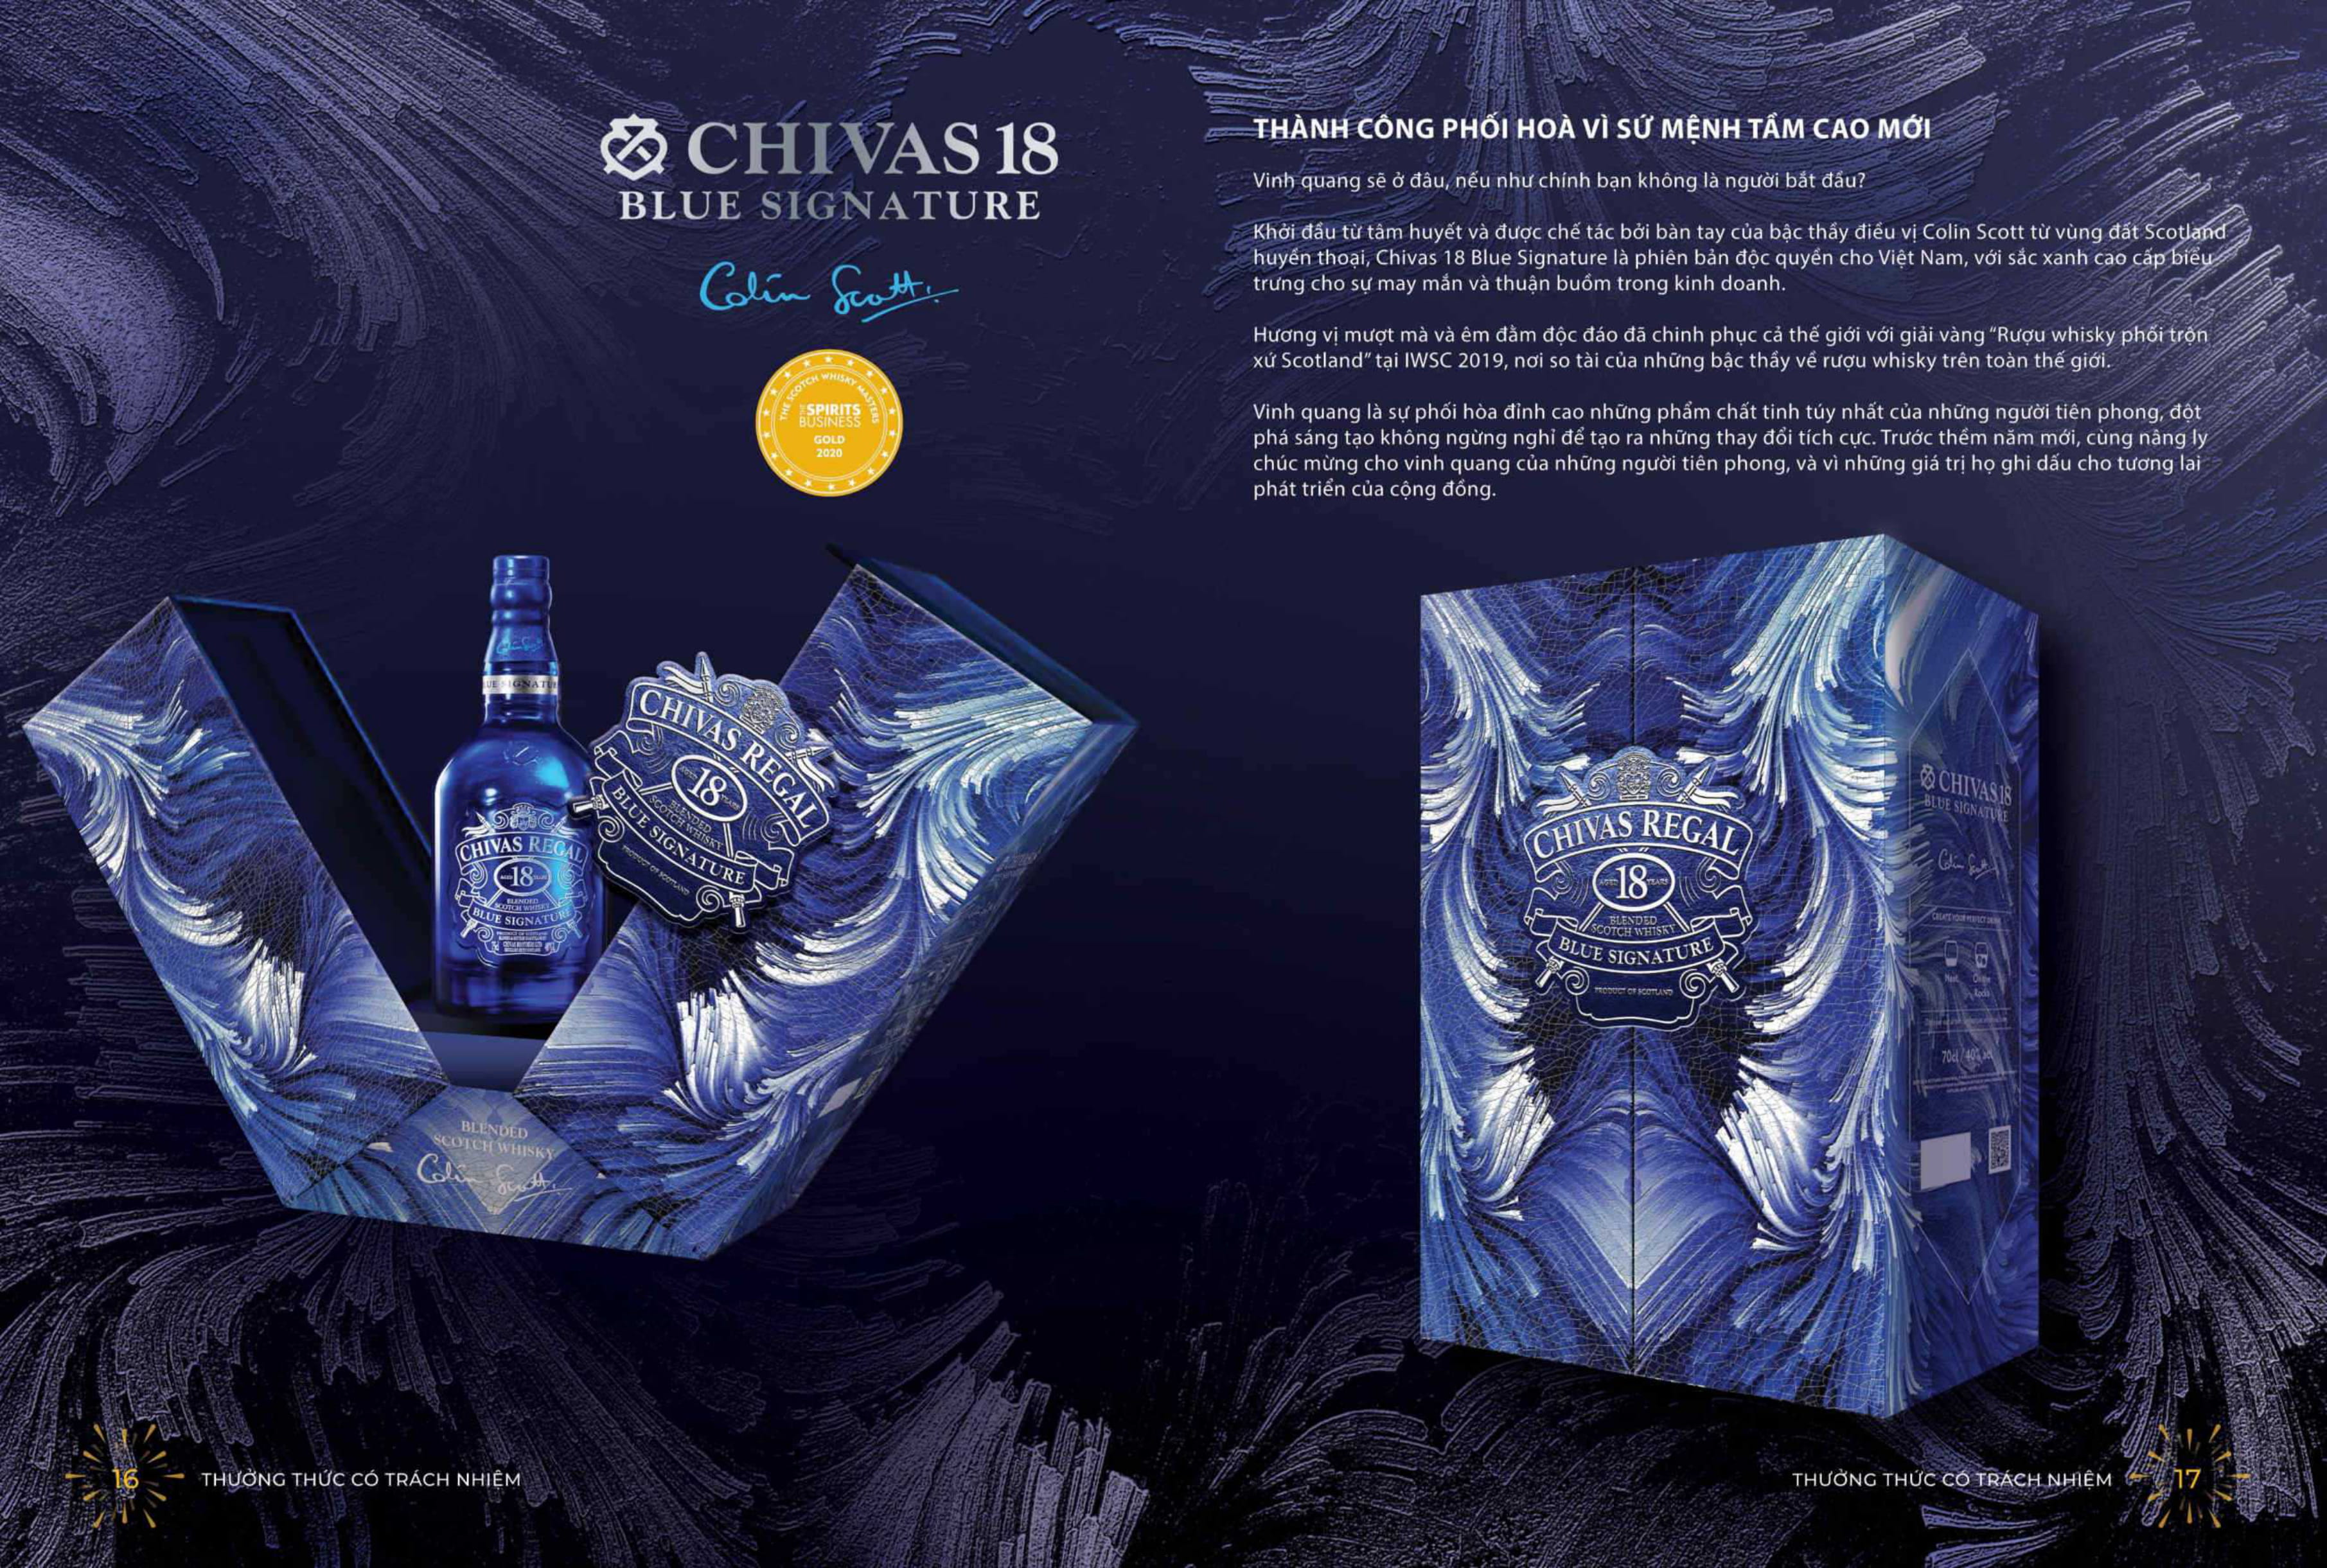 Chivas blue signature gift box 2021